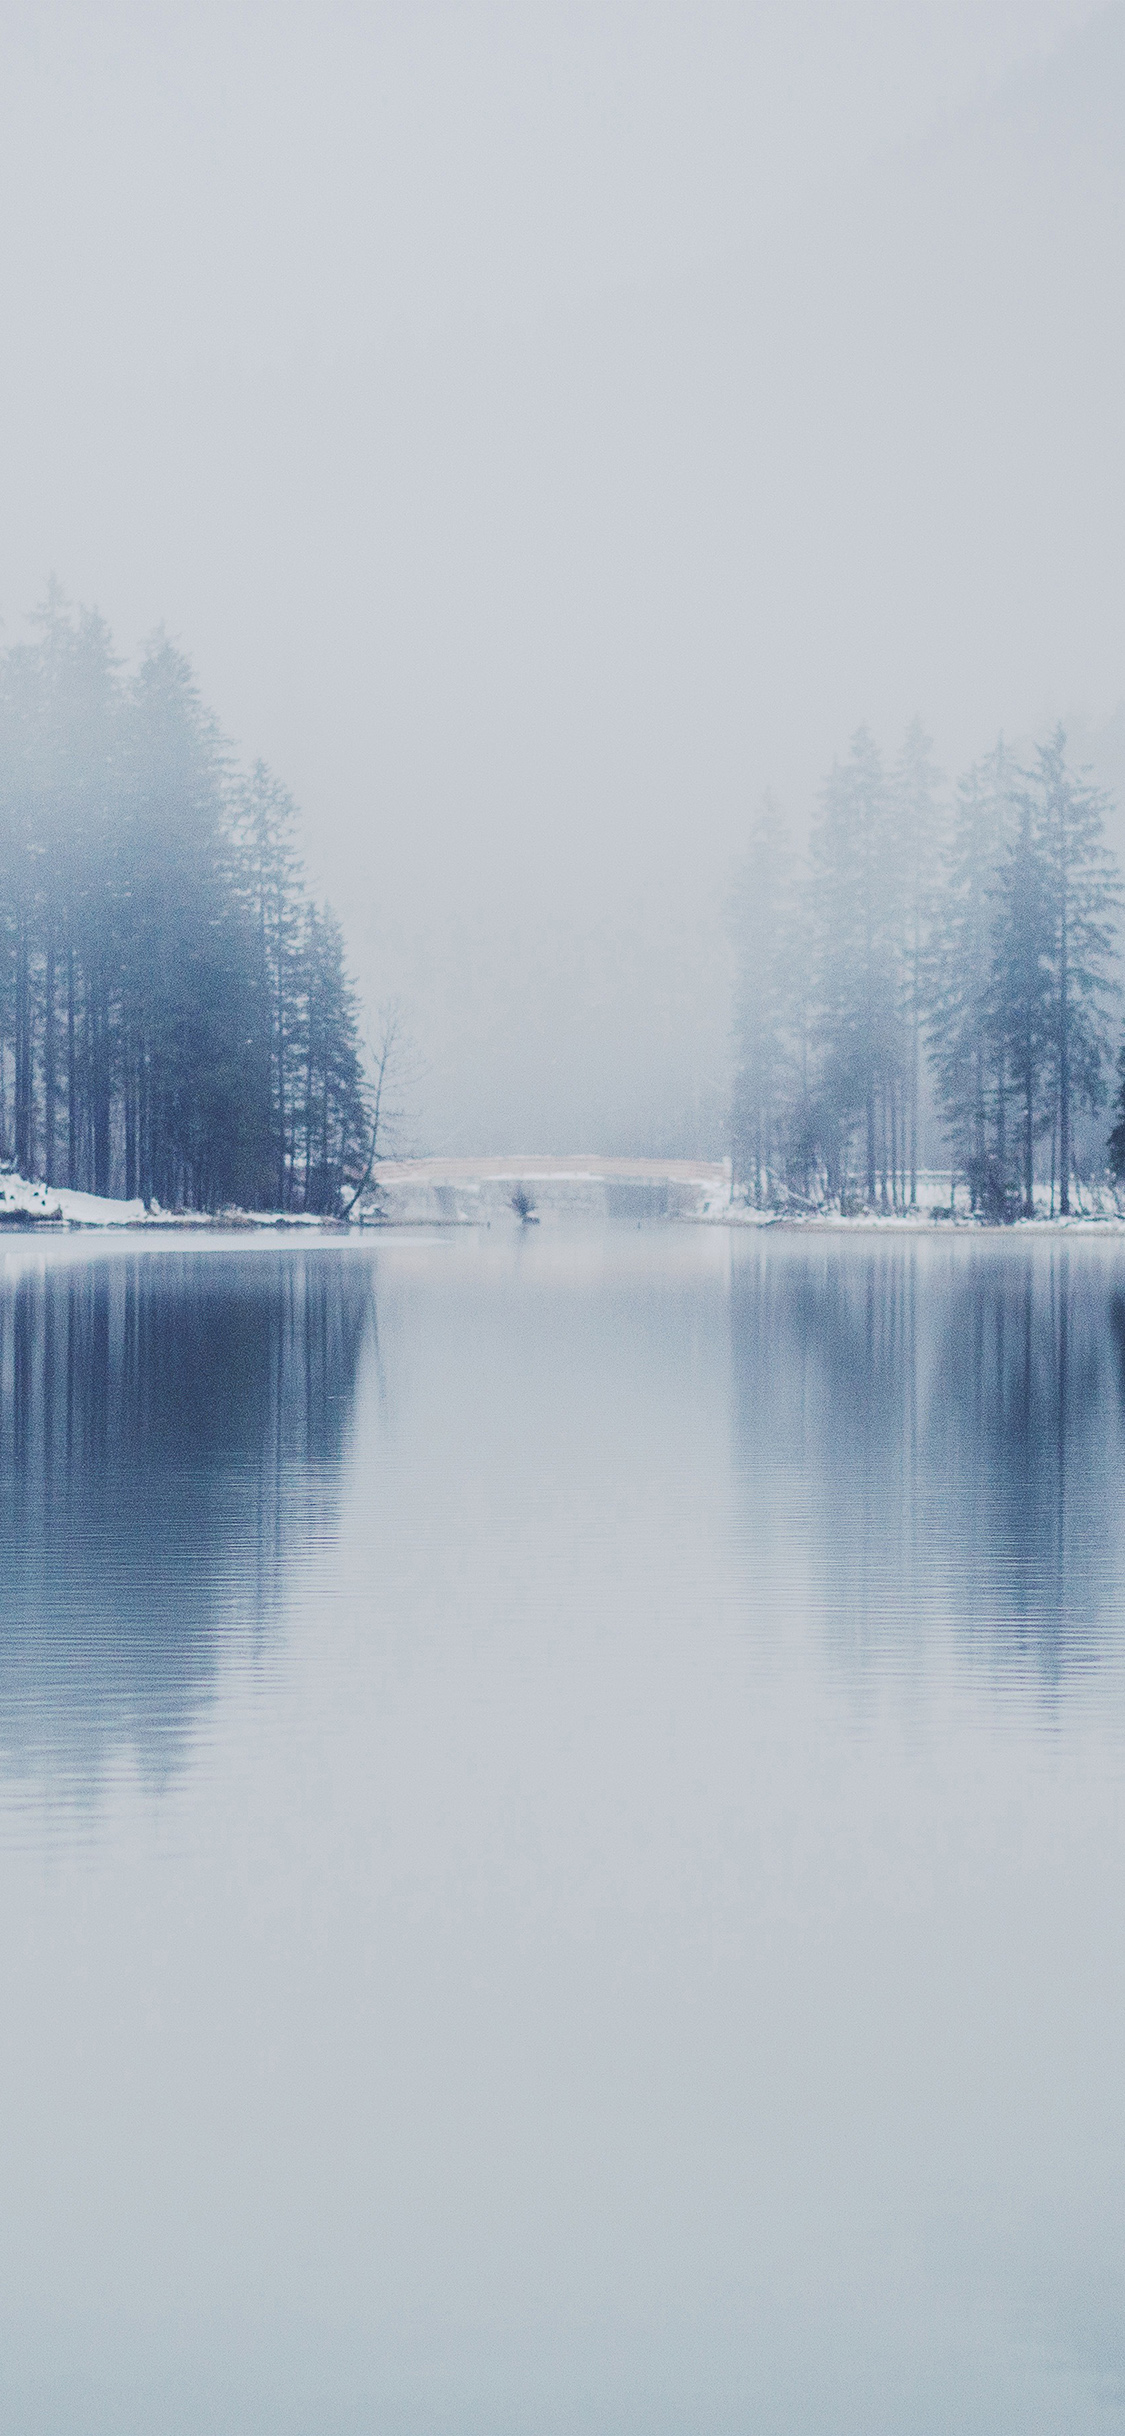 iPhone X wallpaper. winter lake white blue wood nature